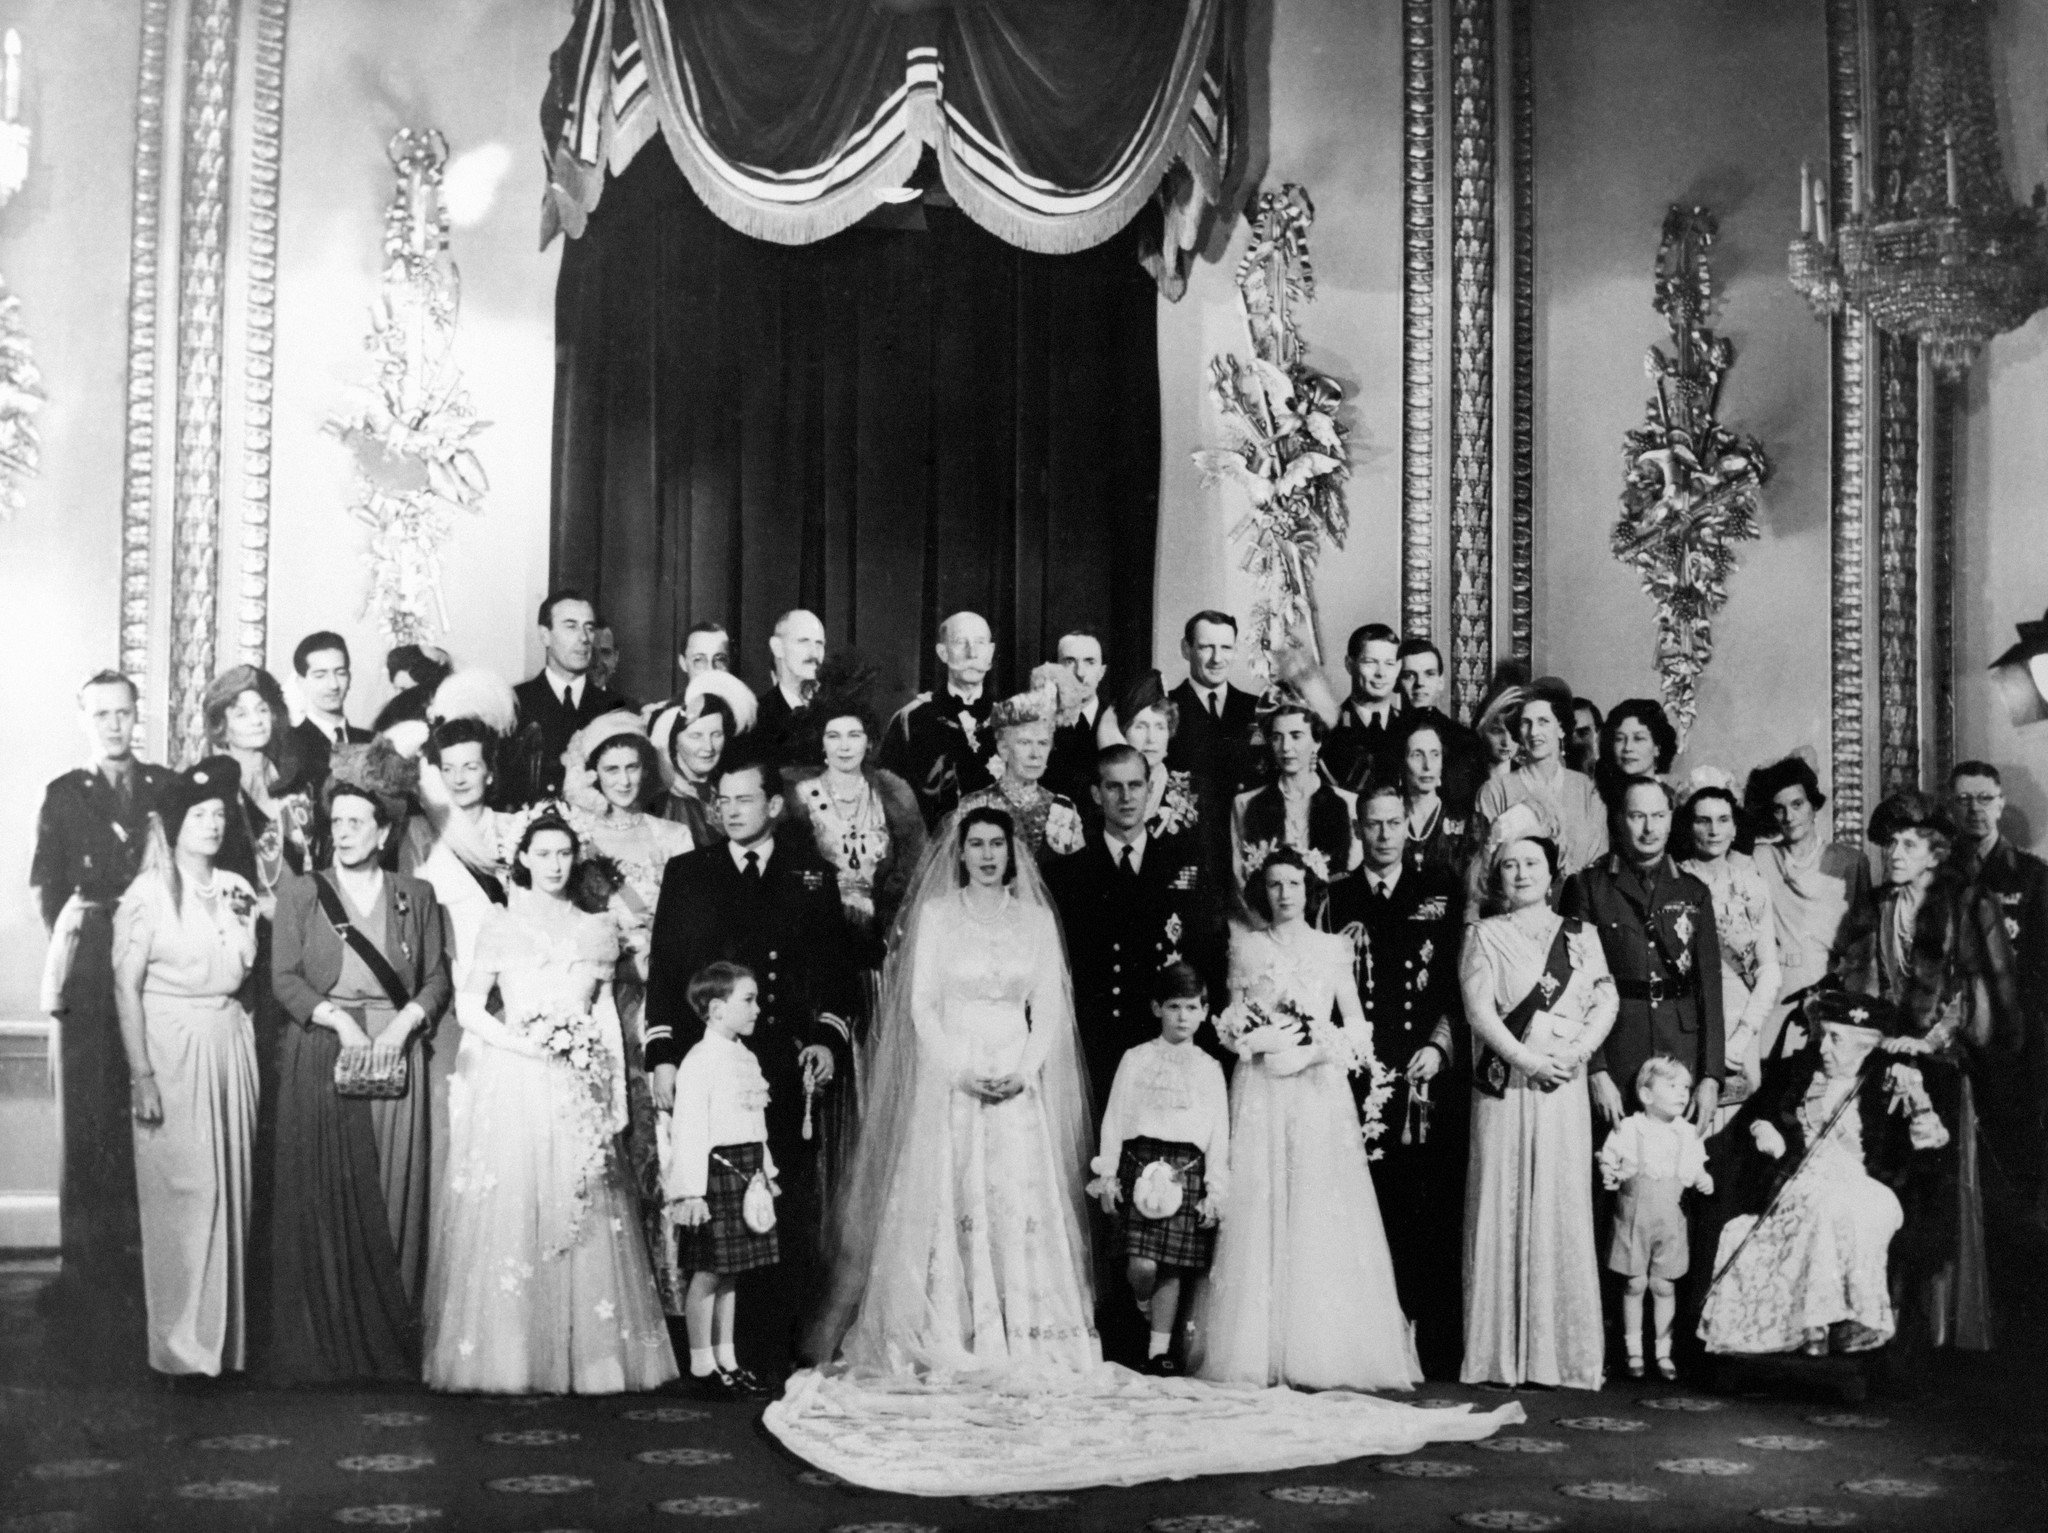 Casamento Isabel II e Philip 1947.jpg